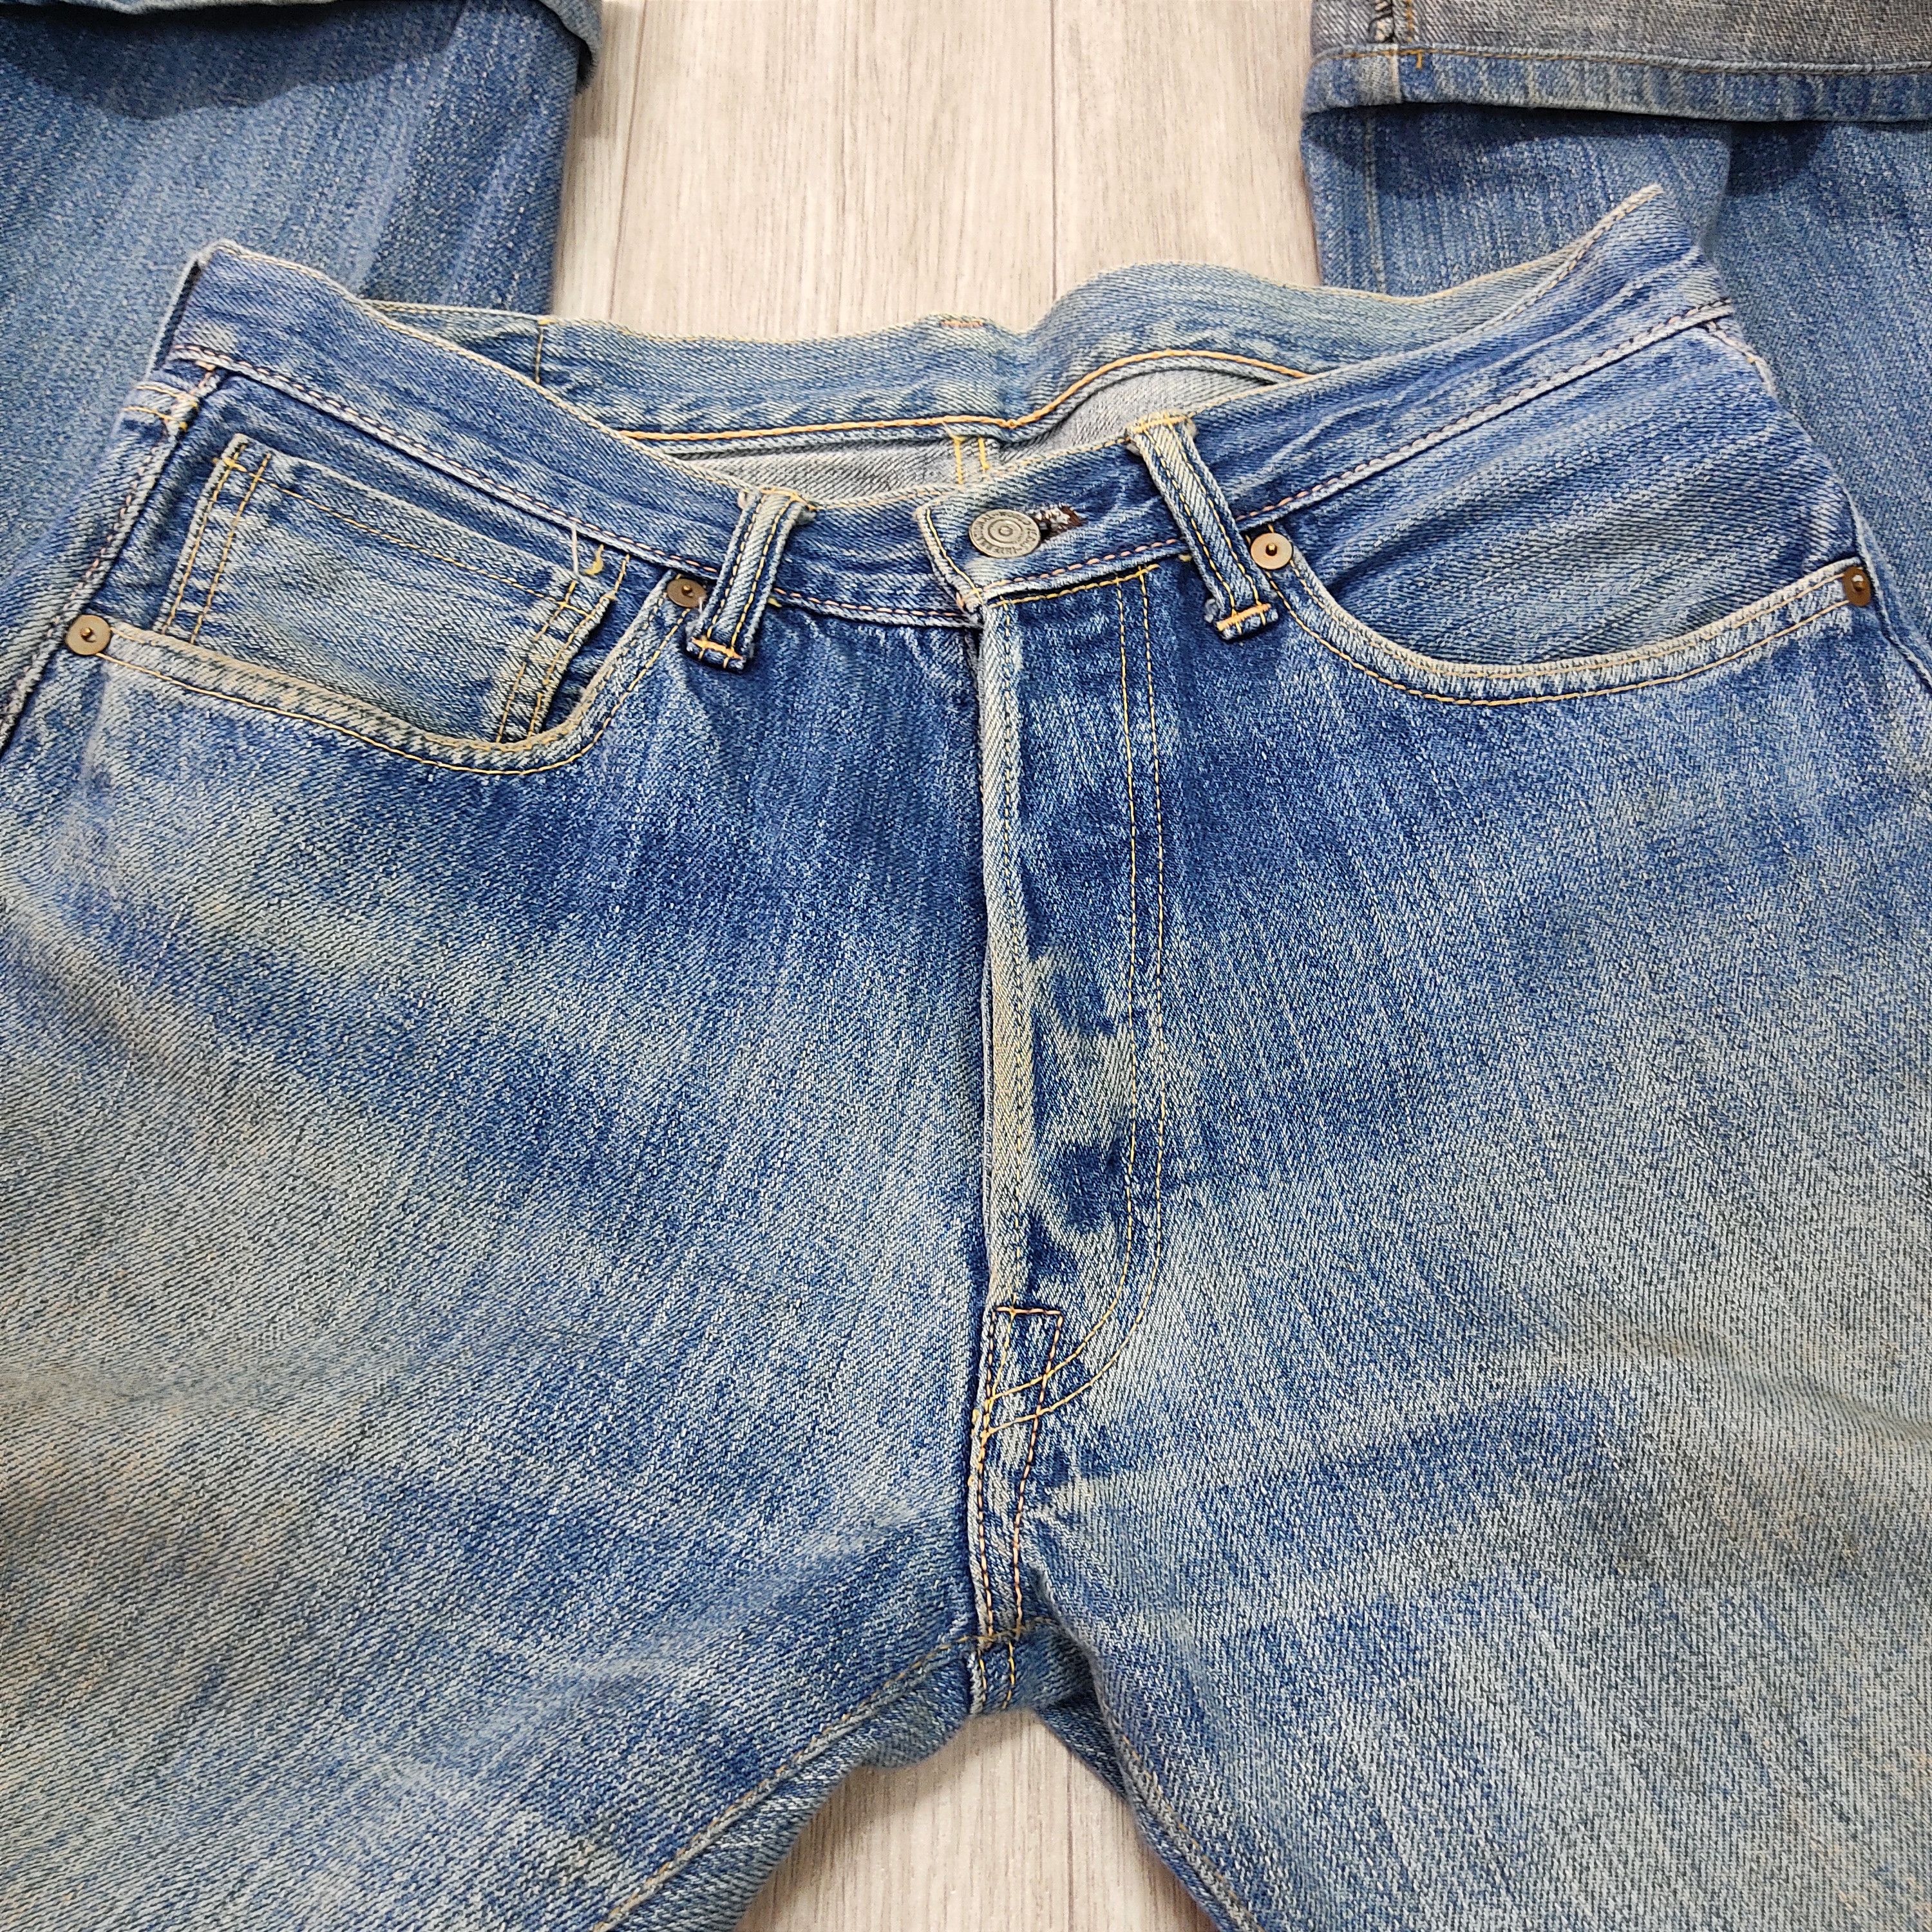 Vintage Cloze Jeans Japanese Selvedge Denim Pants - 6